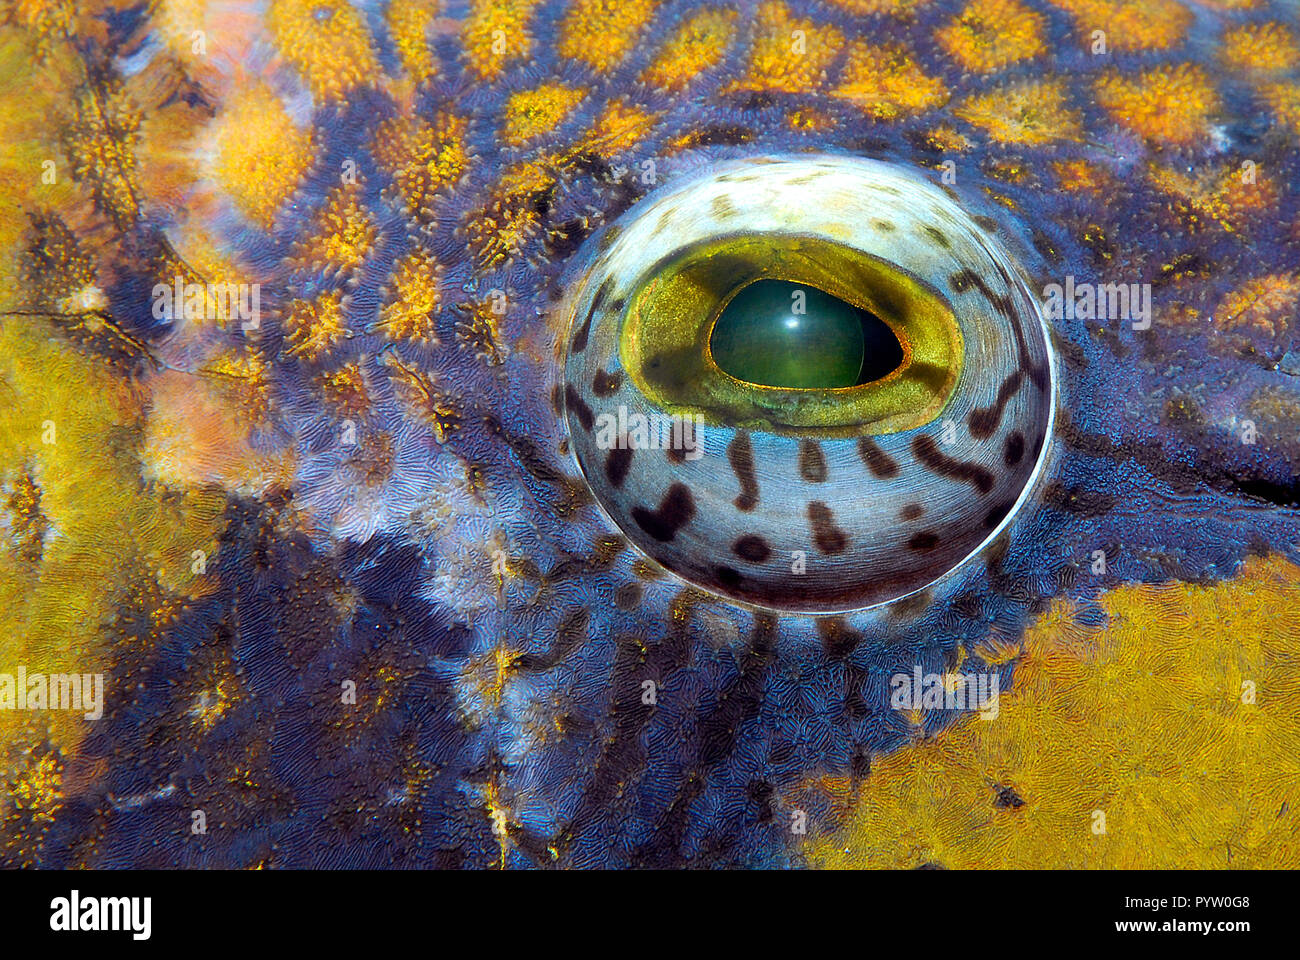 Eye detail of a Giant triggerfish or Titan triggerfish (Balistoides viridescens), Hurghada, Egypt Stock Photo